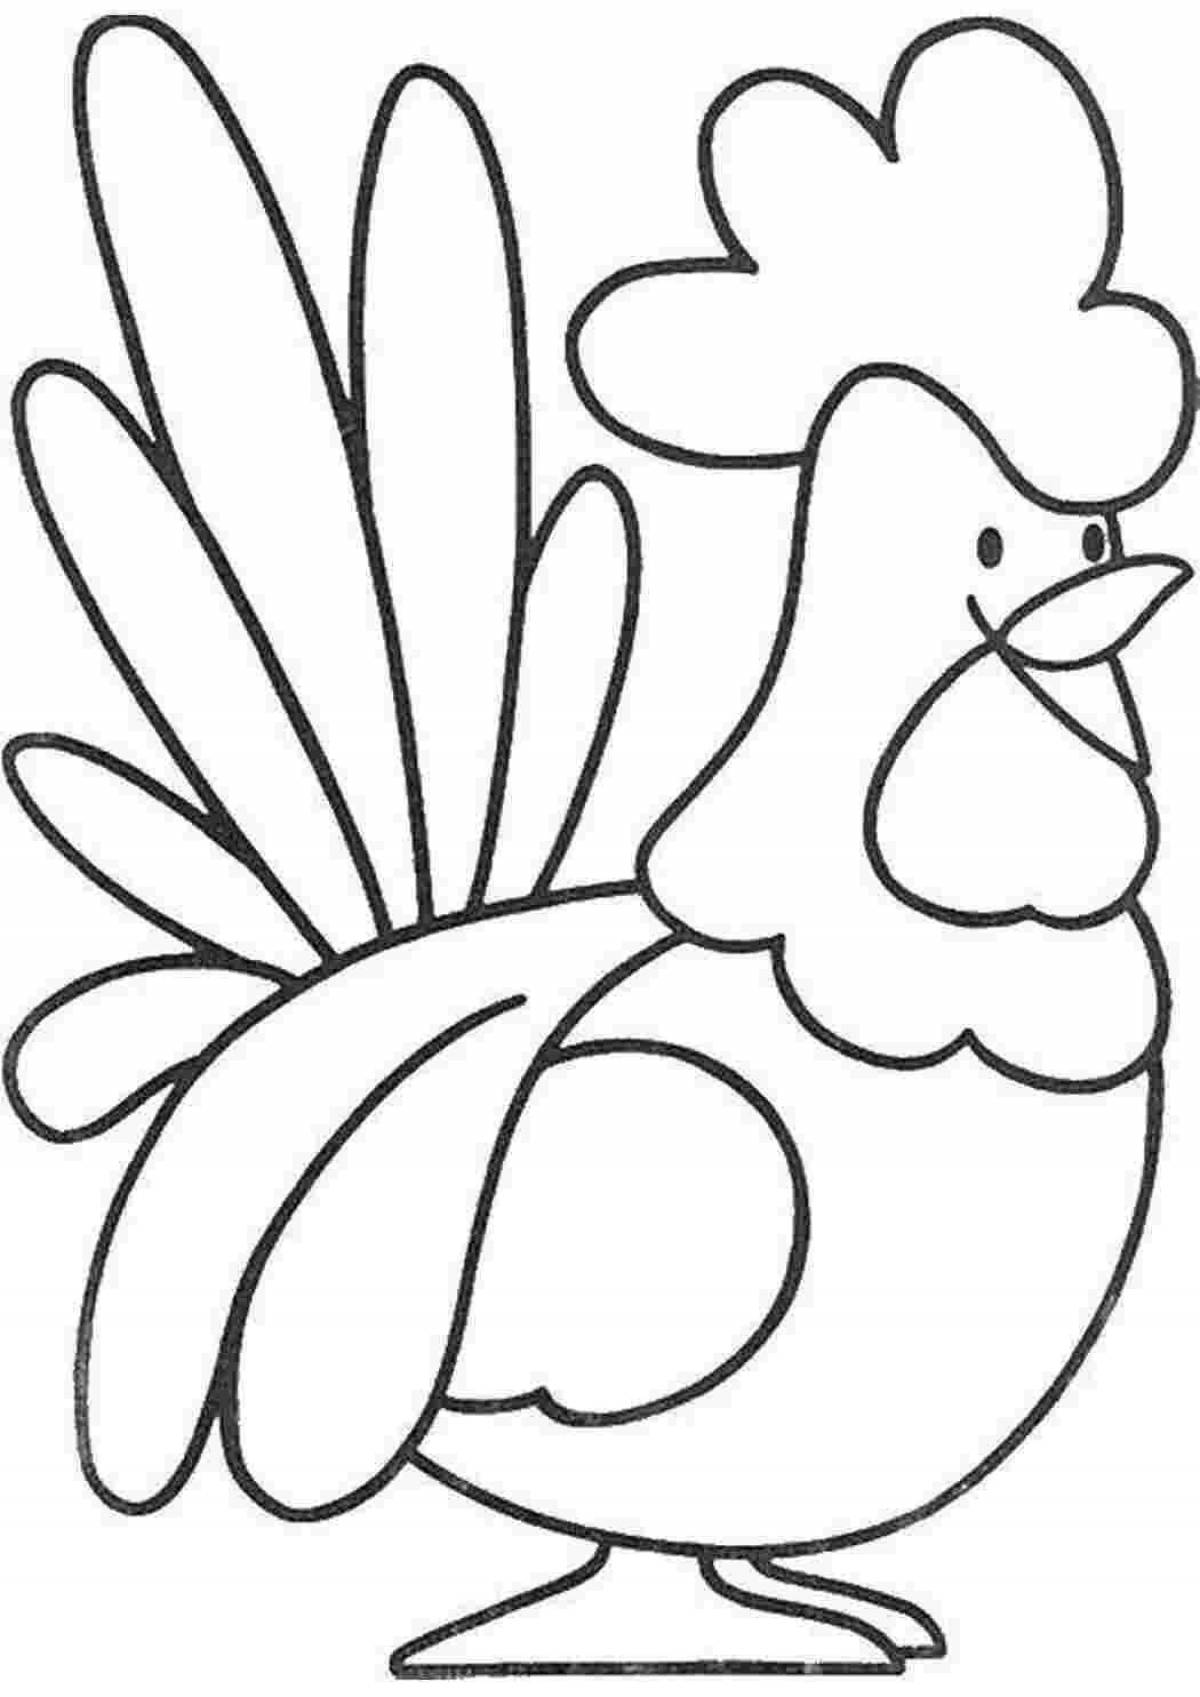 Amusing coloring cockerel for kids 2-3 years old